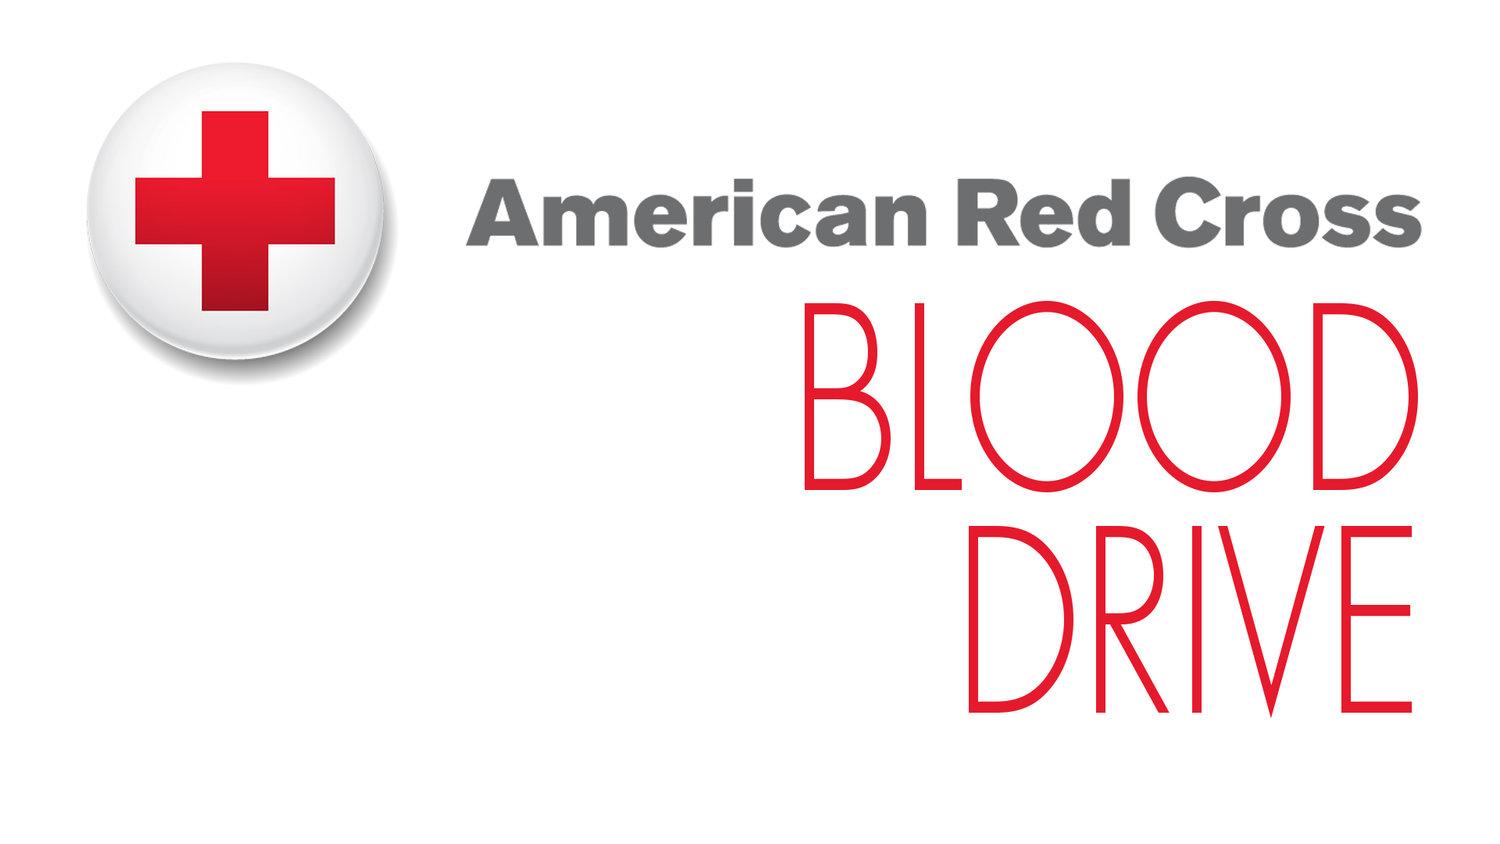 American Red Cross Blood Drive Logo - American Red Cross Blood Drive